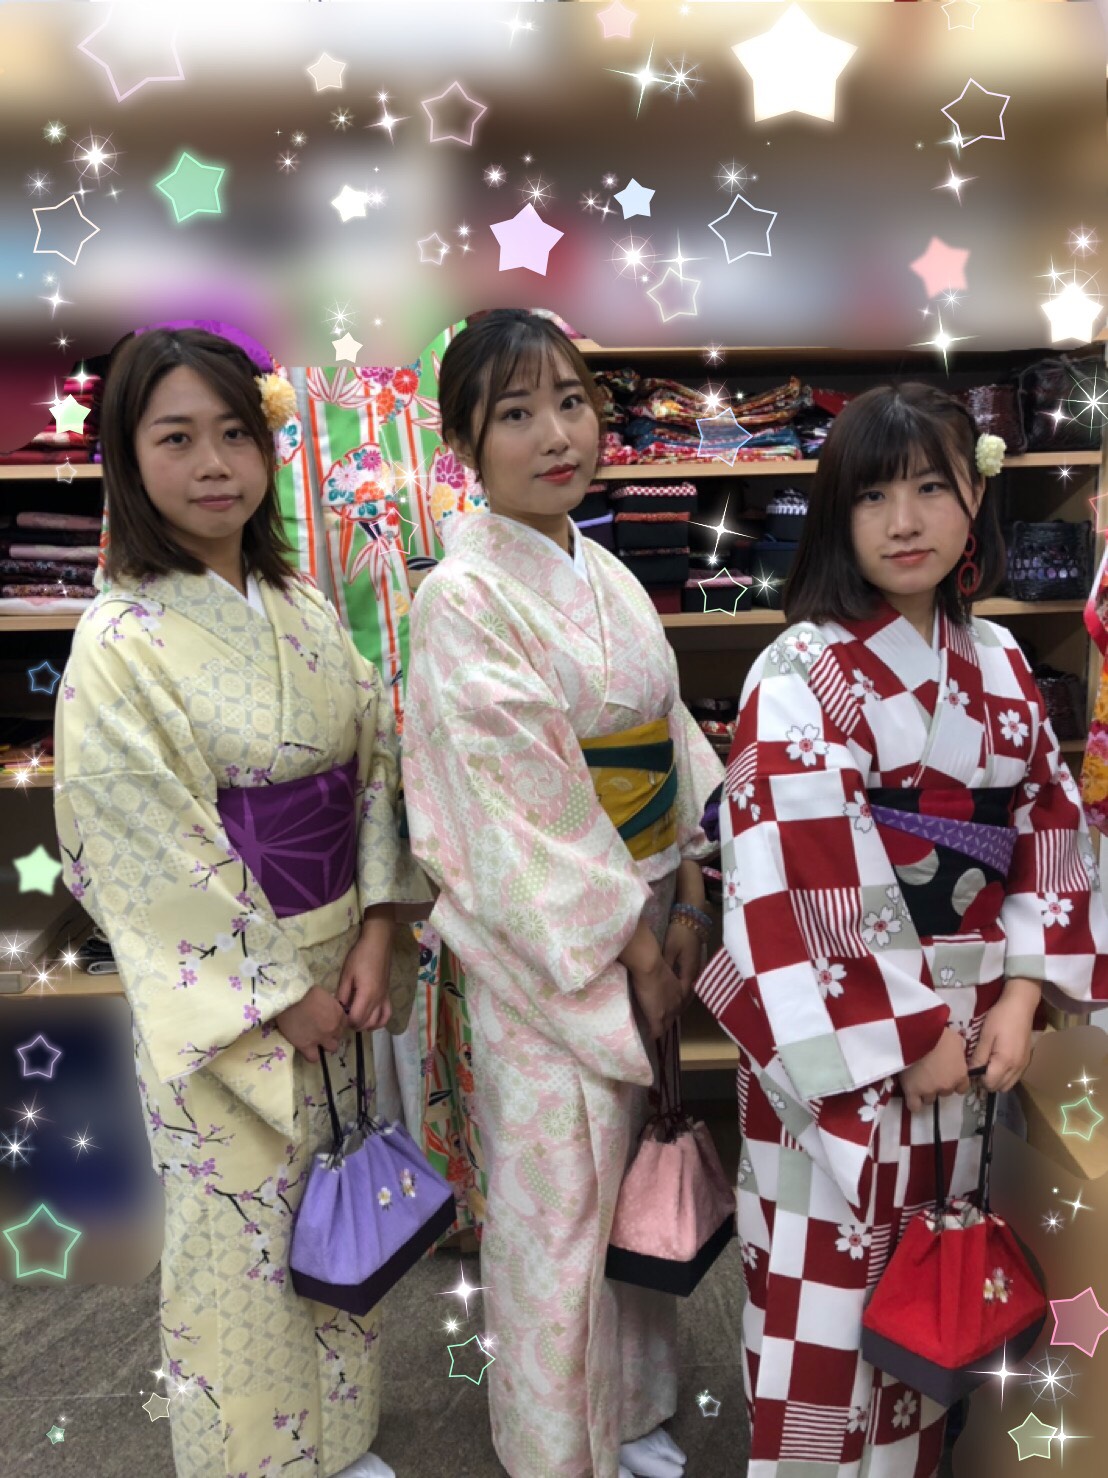 Shop Topics 渋谷もハロウィンモード 着物レンタルvasara渋谷店 渋谷で着物 浴衣を楽しむなら 着物レンタルvasara